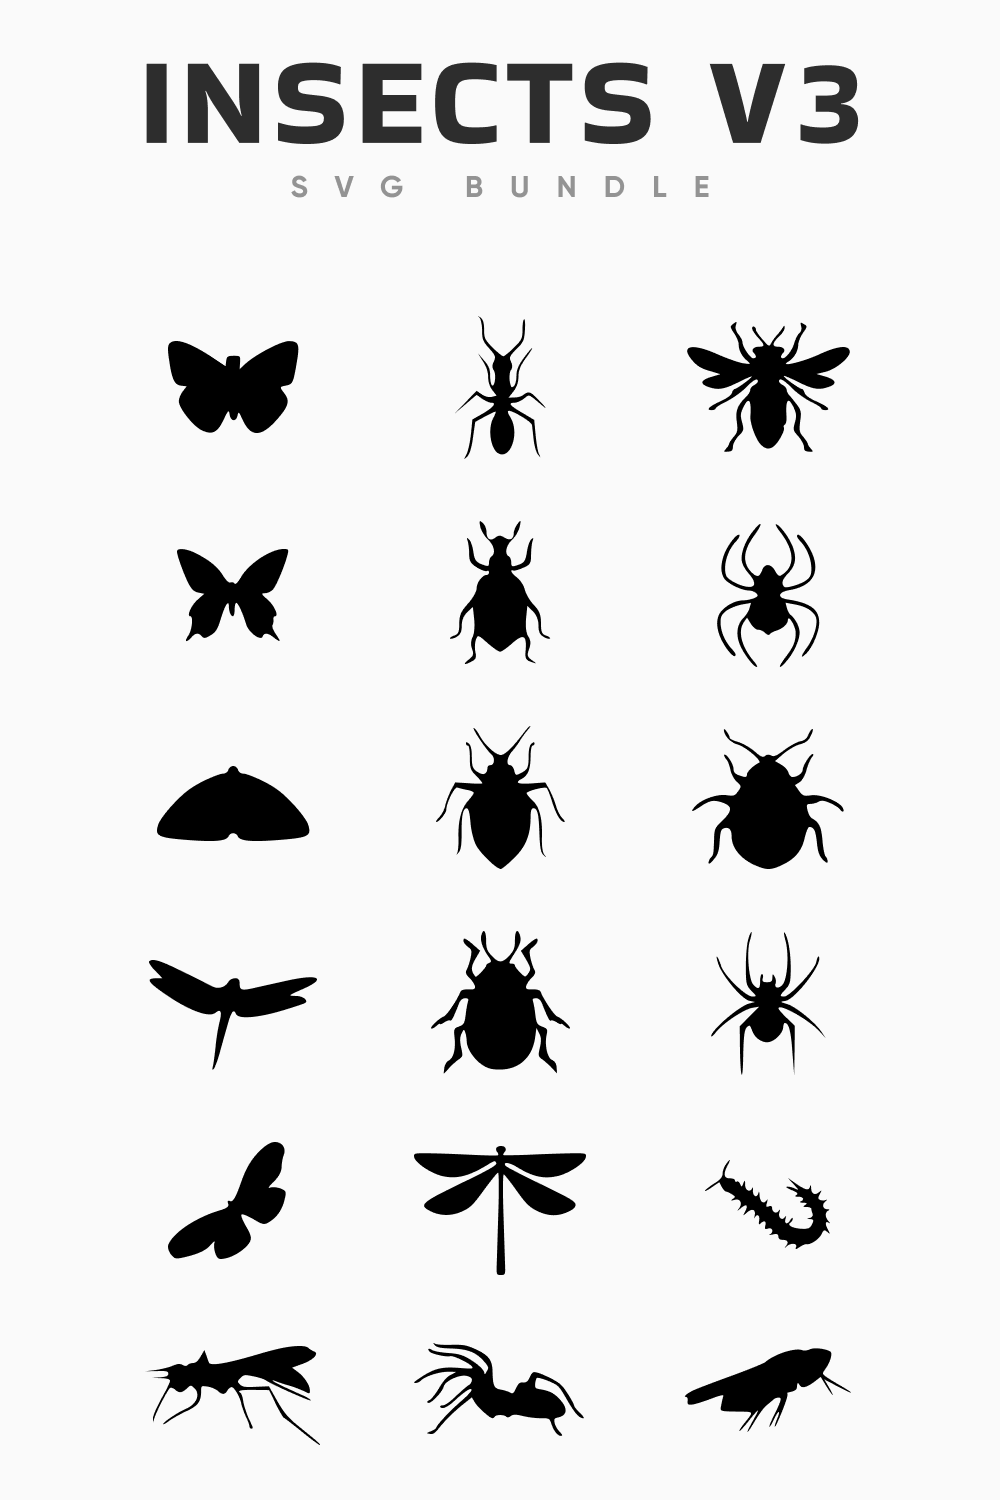 Insects v3 SVG bundle.